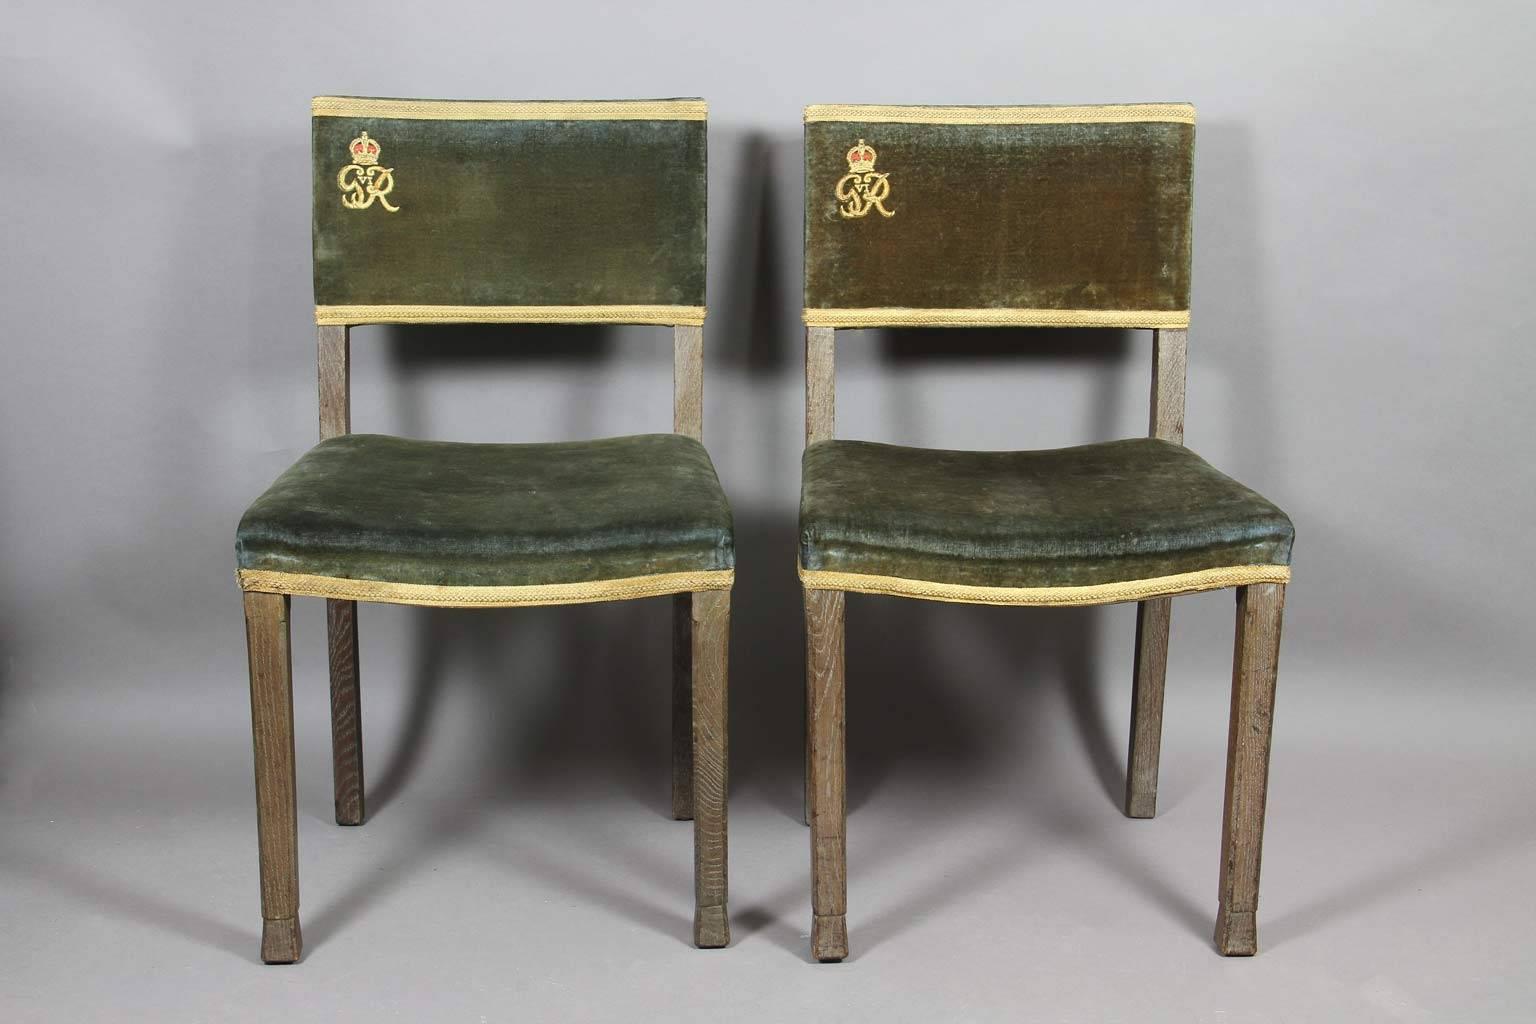 English Pair of George VI Coronation Chairs